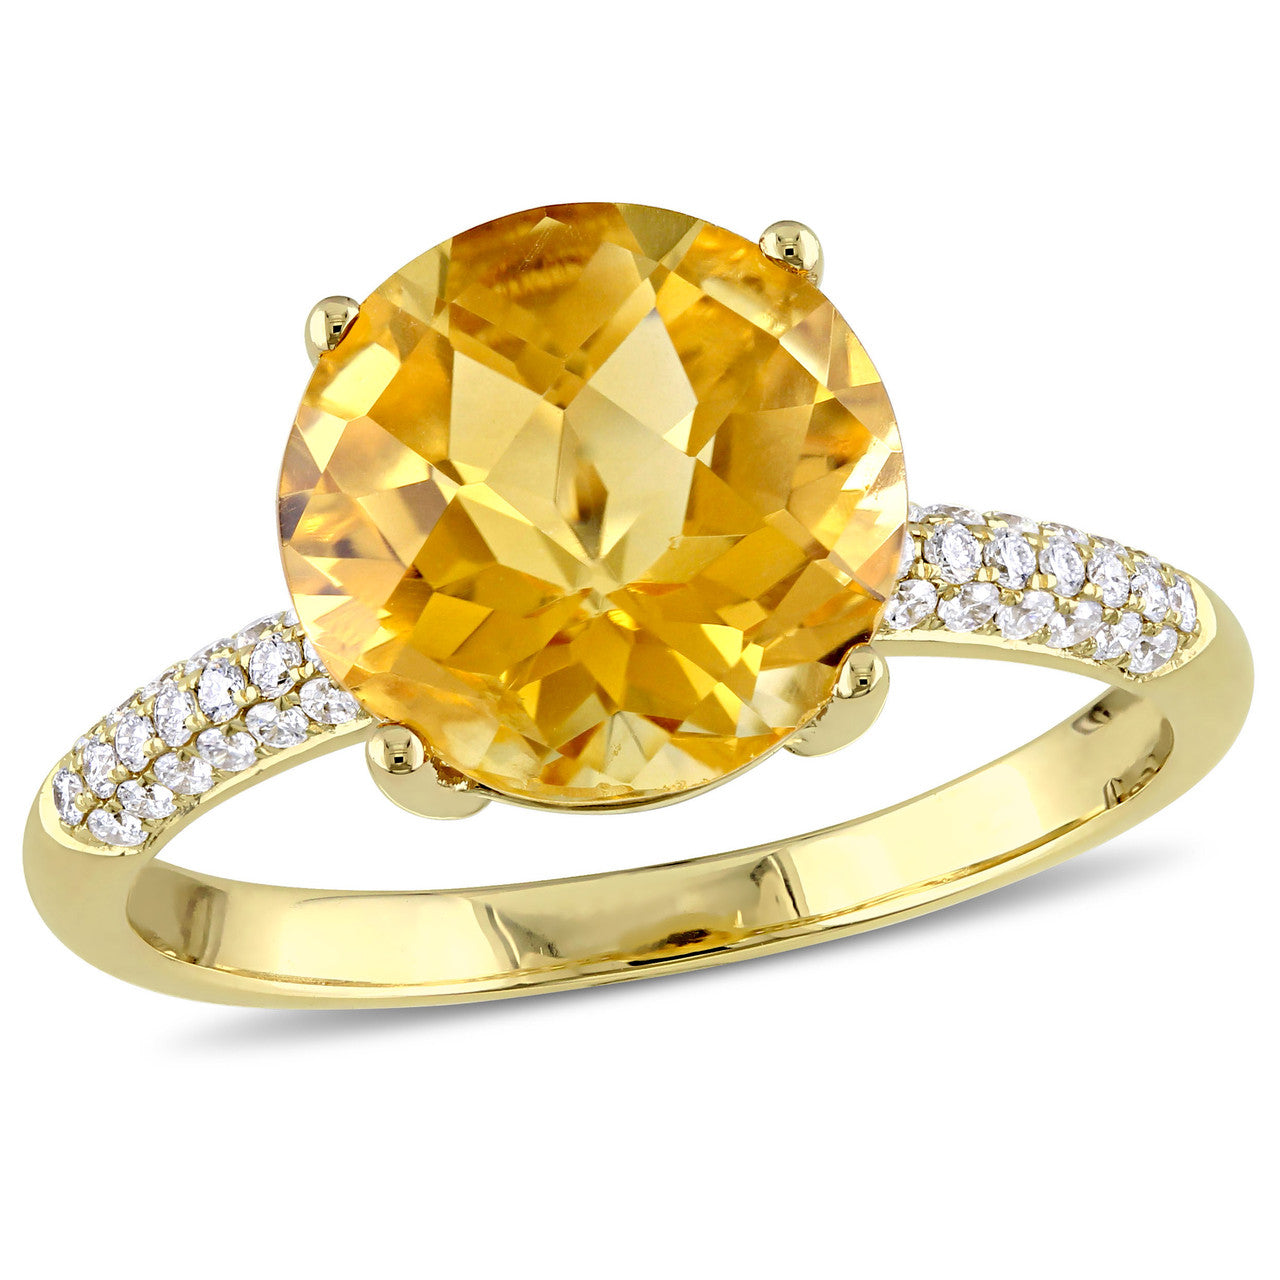 Ice Jewellery 1/5 CT TDW Diamond  and 3 1/3 CT TGW Citrine Beaded Ring in 14k Yellow Gold - 75000005240 | Ice Jewellery Australia